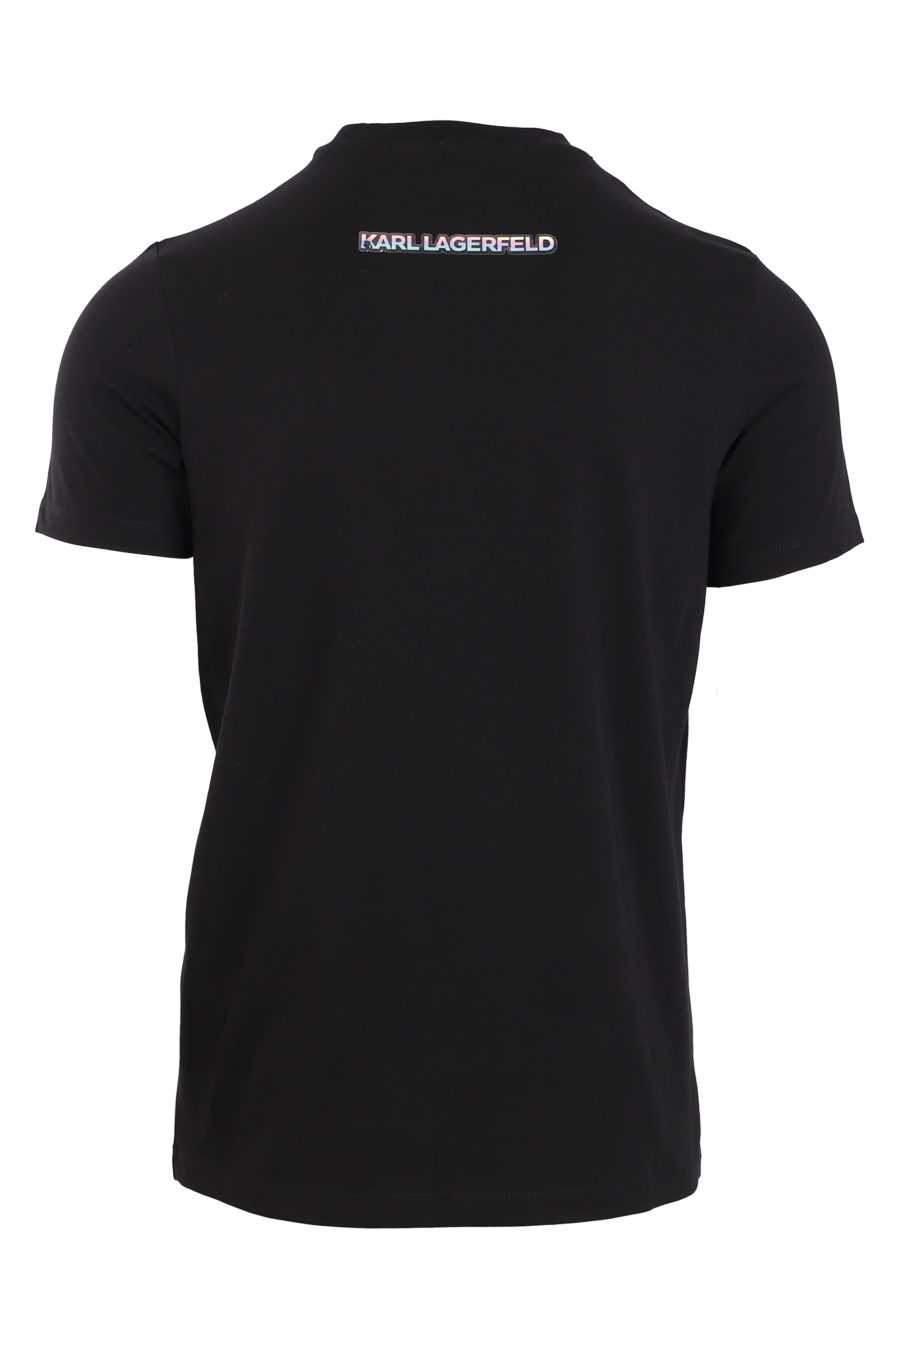 Camiseta negra con logo en silueta tornasol pequeño - IMG 0894